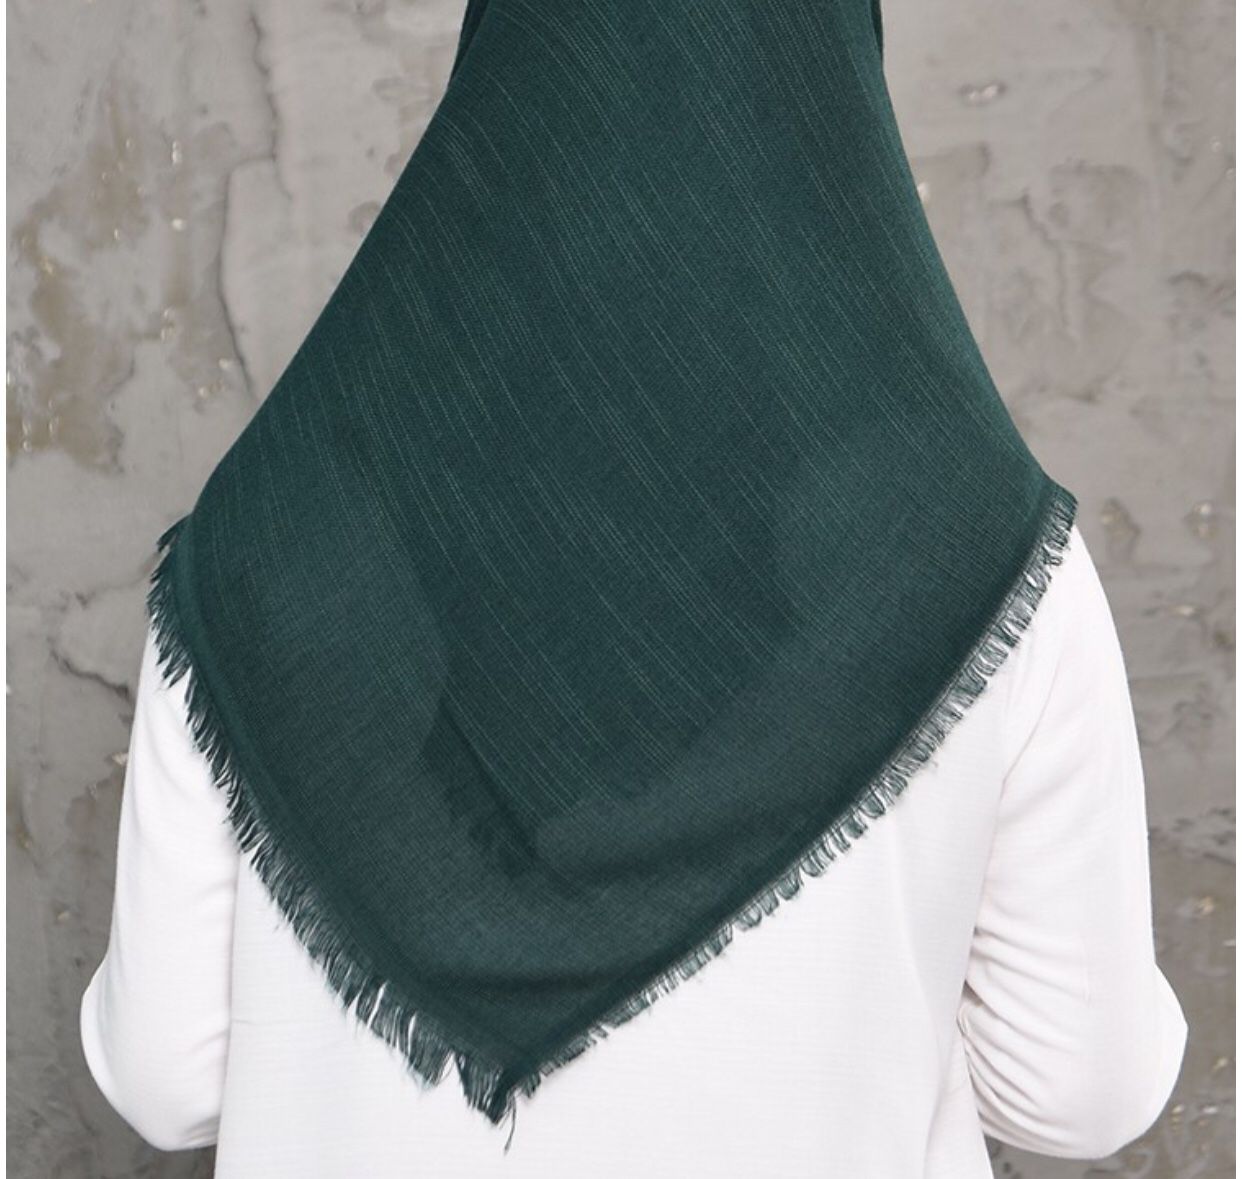 Green dark shawl